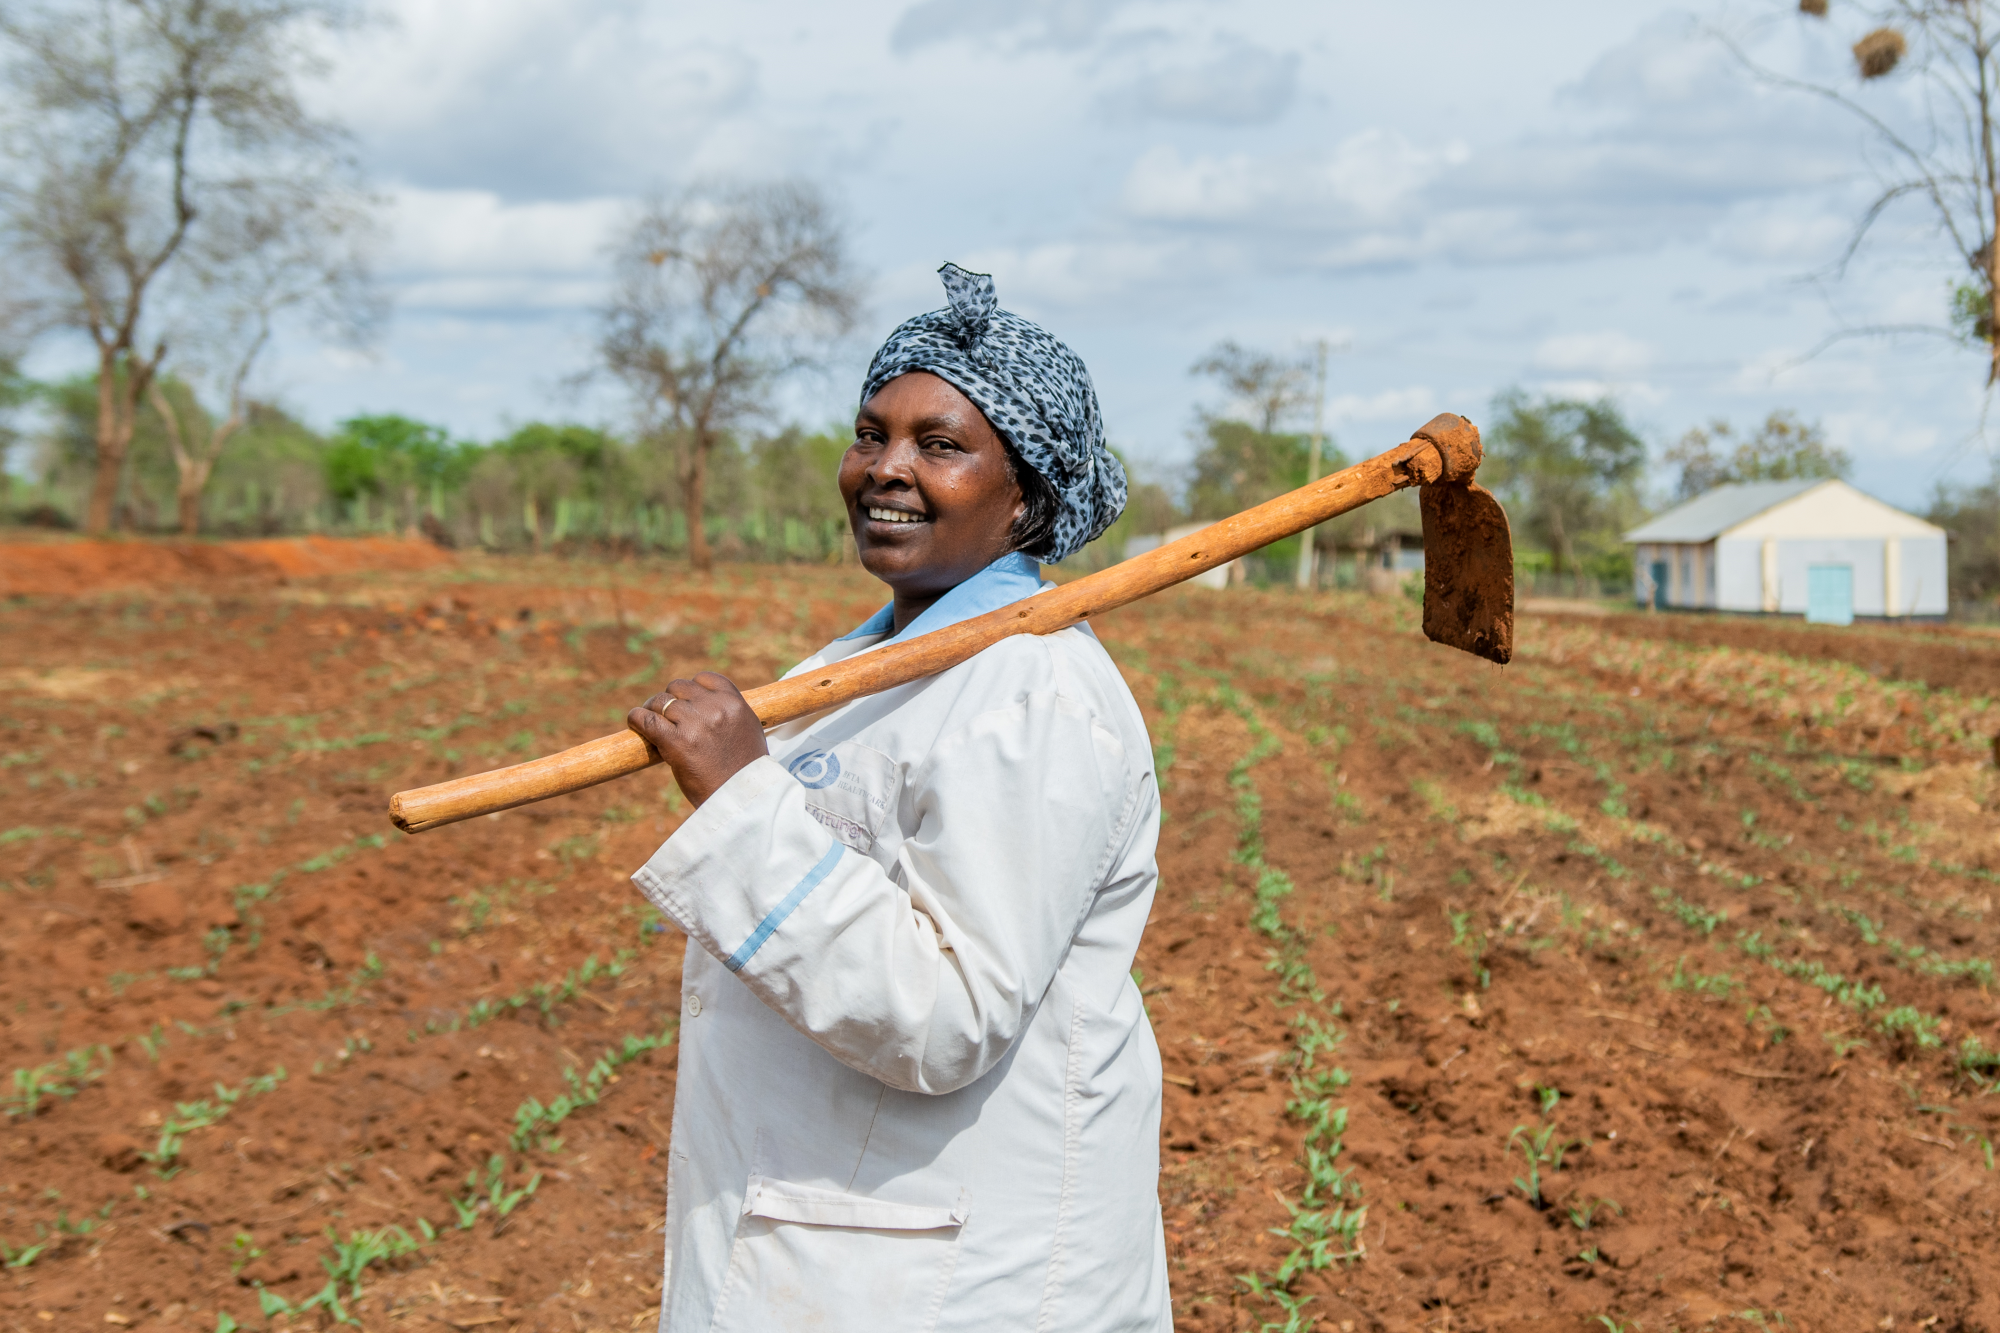 Josephine Kimonyi, farmer, at her farm in Makueni County, Kenya on November 13, 2022.